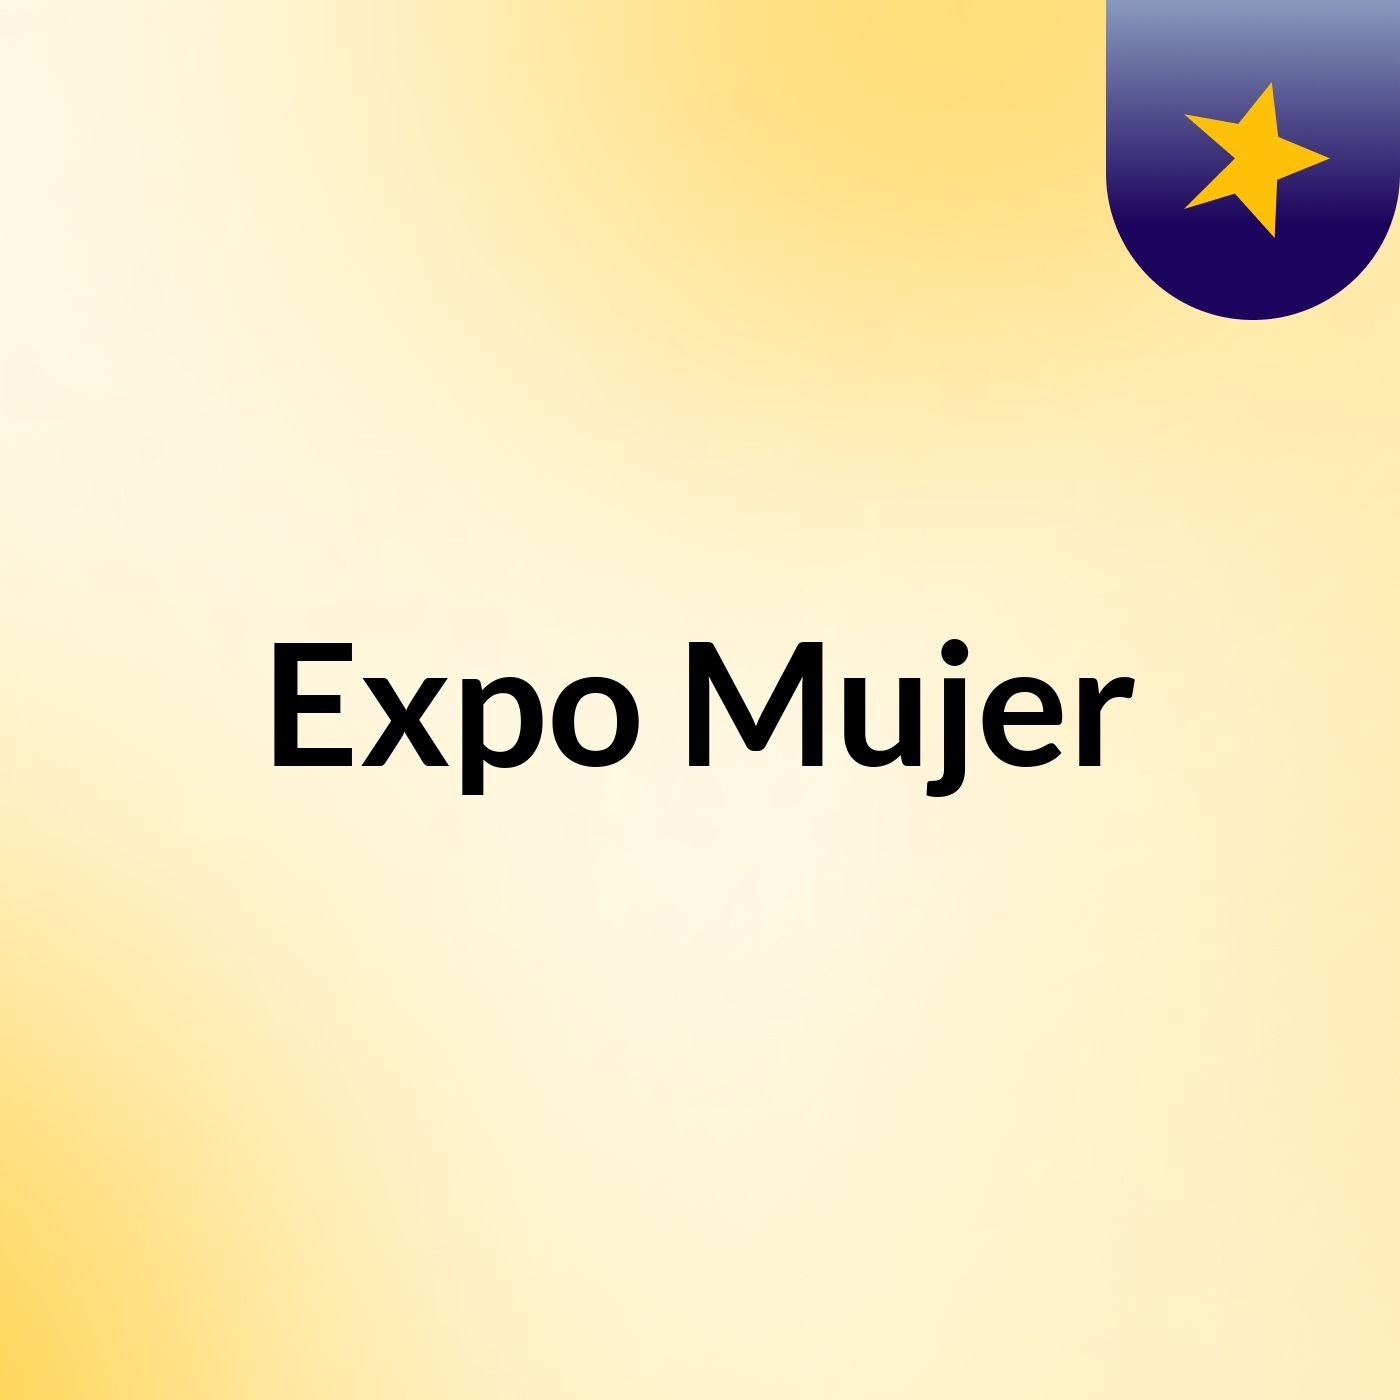 Expo Mujer